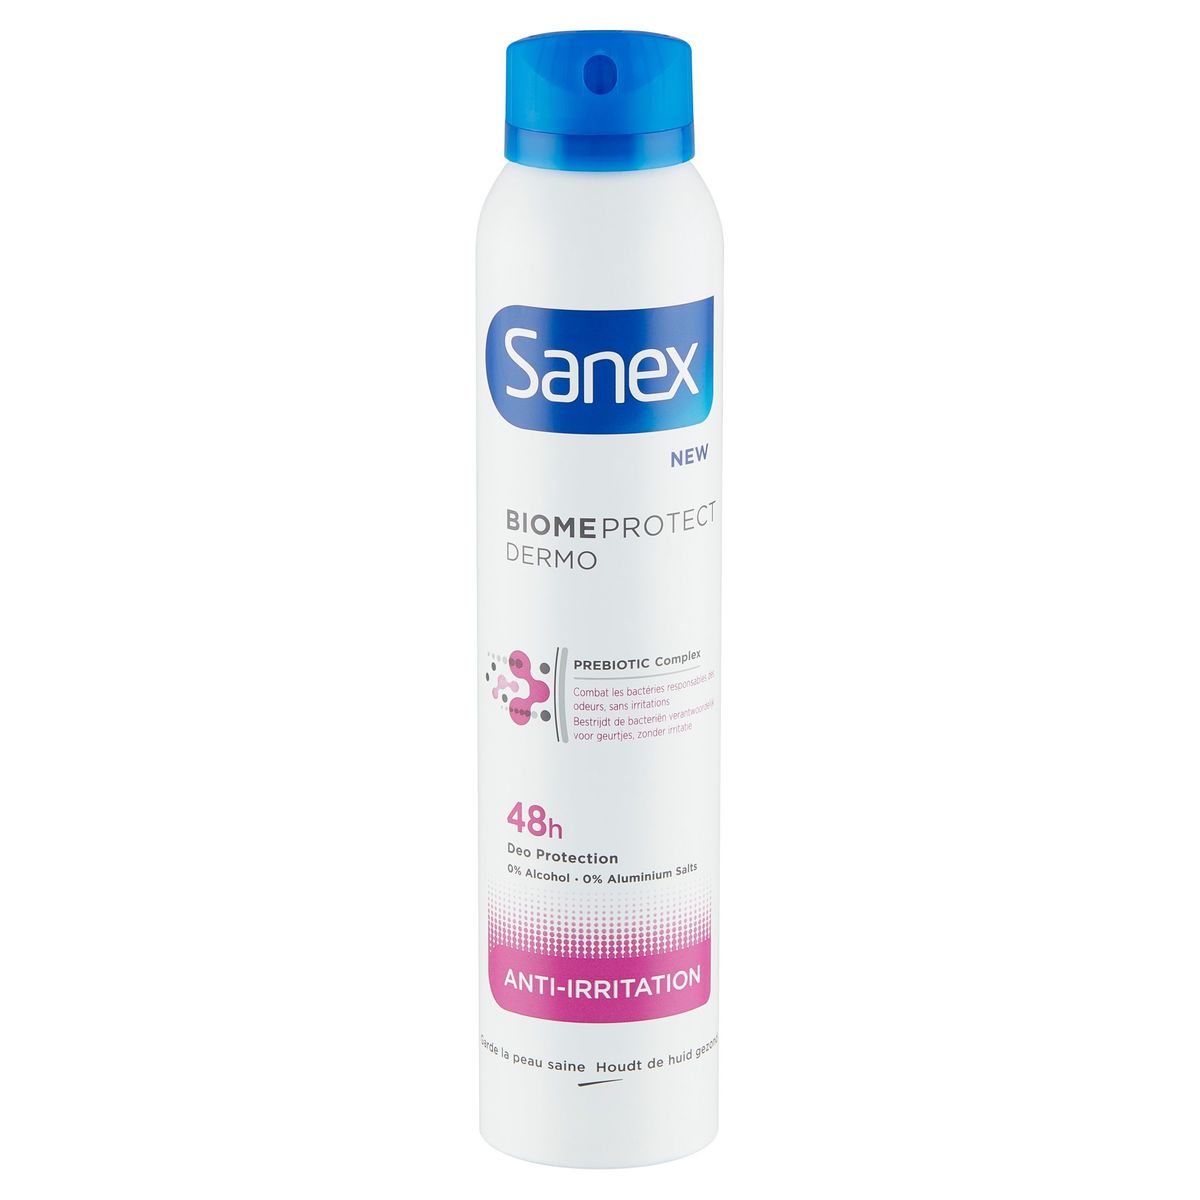 Sanex spray Biomeprotect Dermo Anti-irritation 200ml